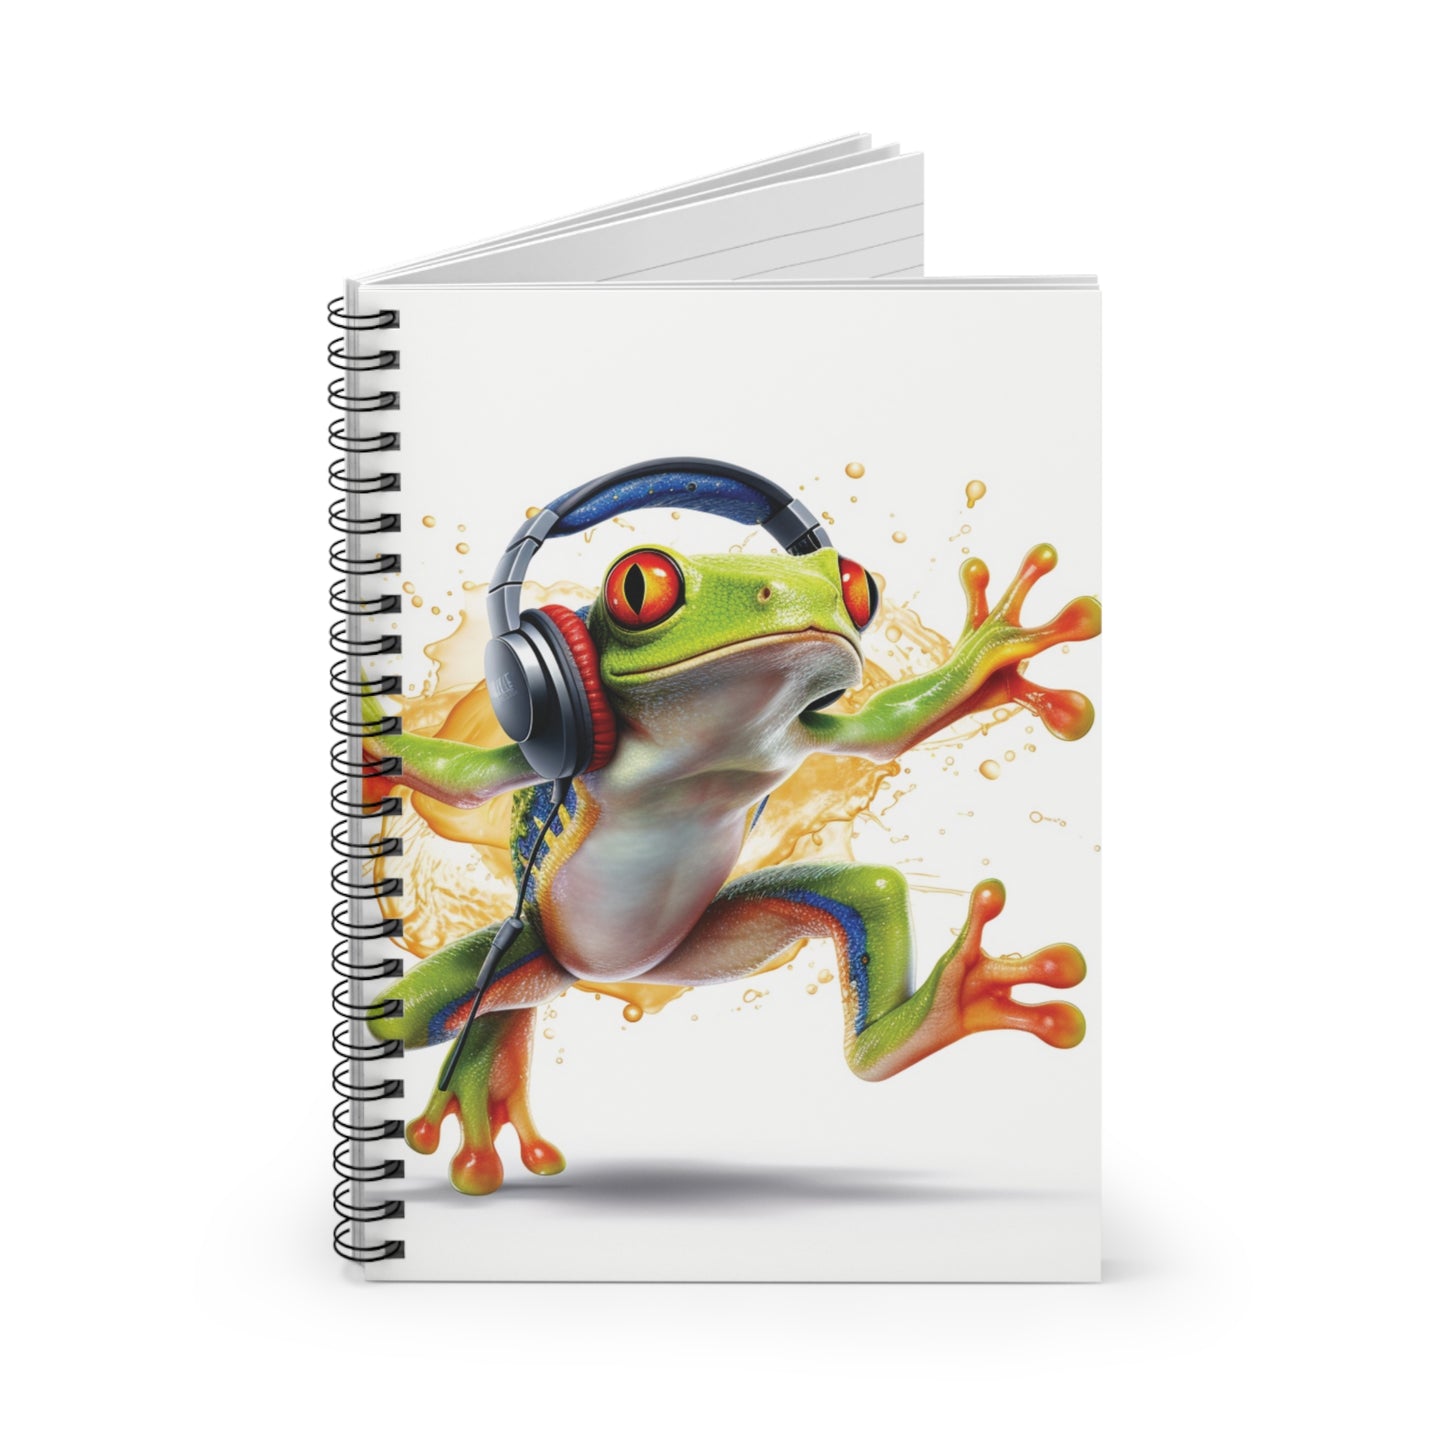 Red Eyed Tree Frog Dancing Headphones | Spiral Notebook - Ruled Line